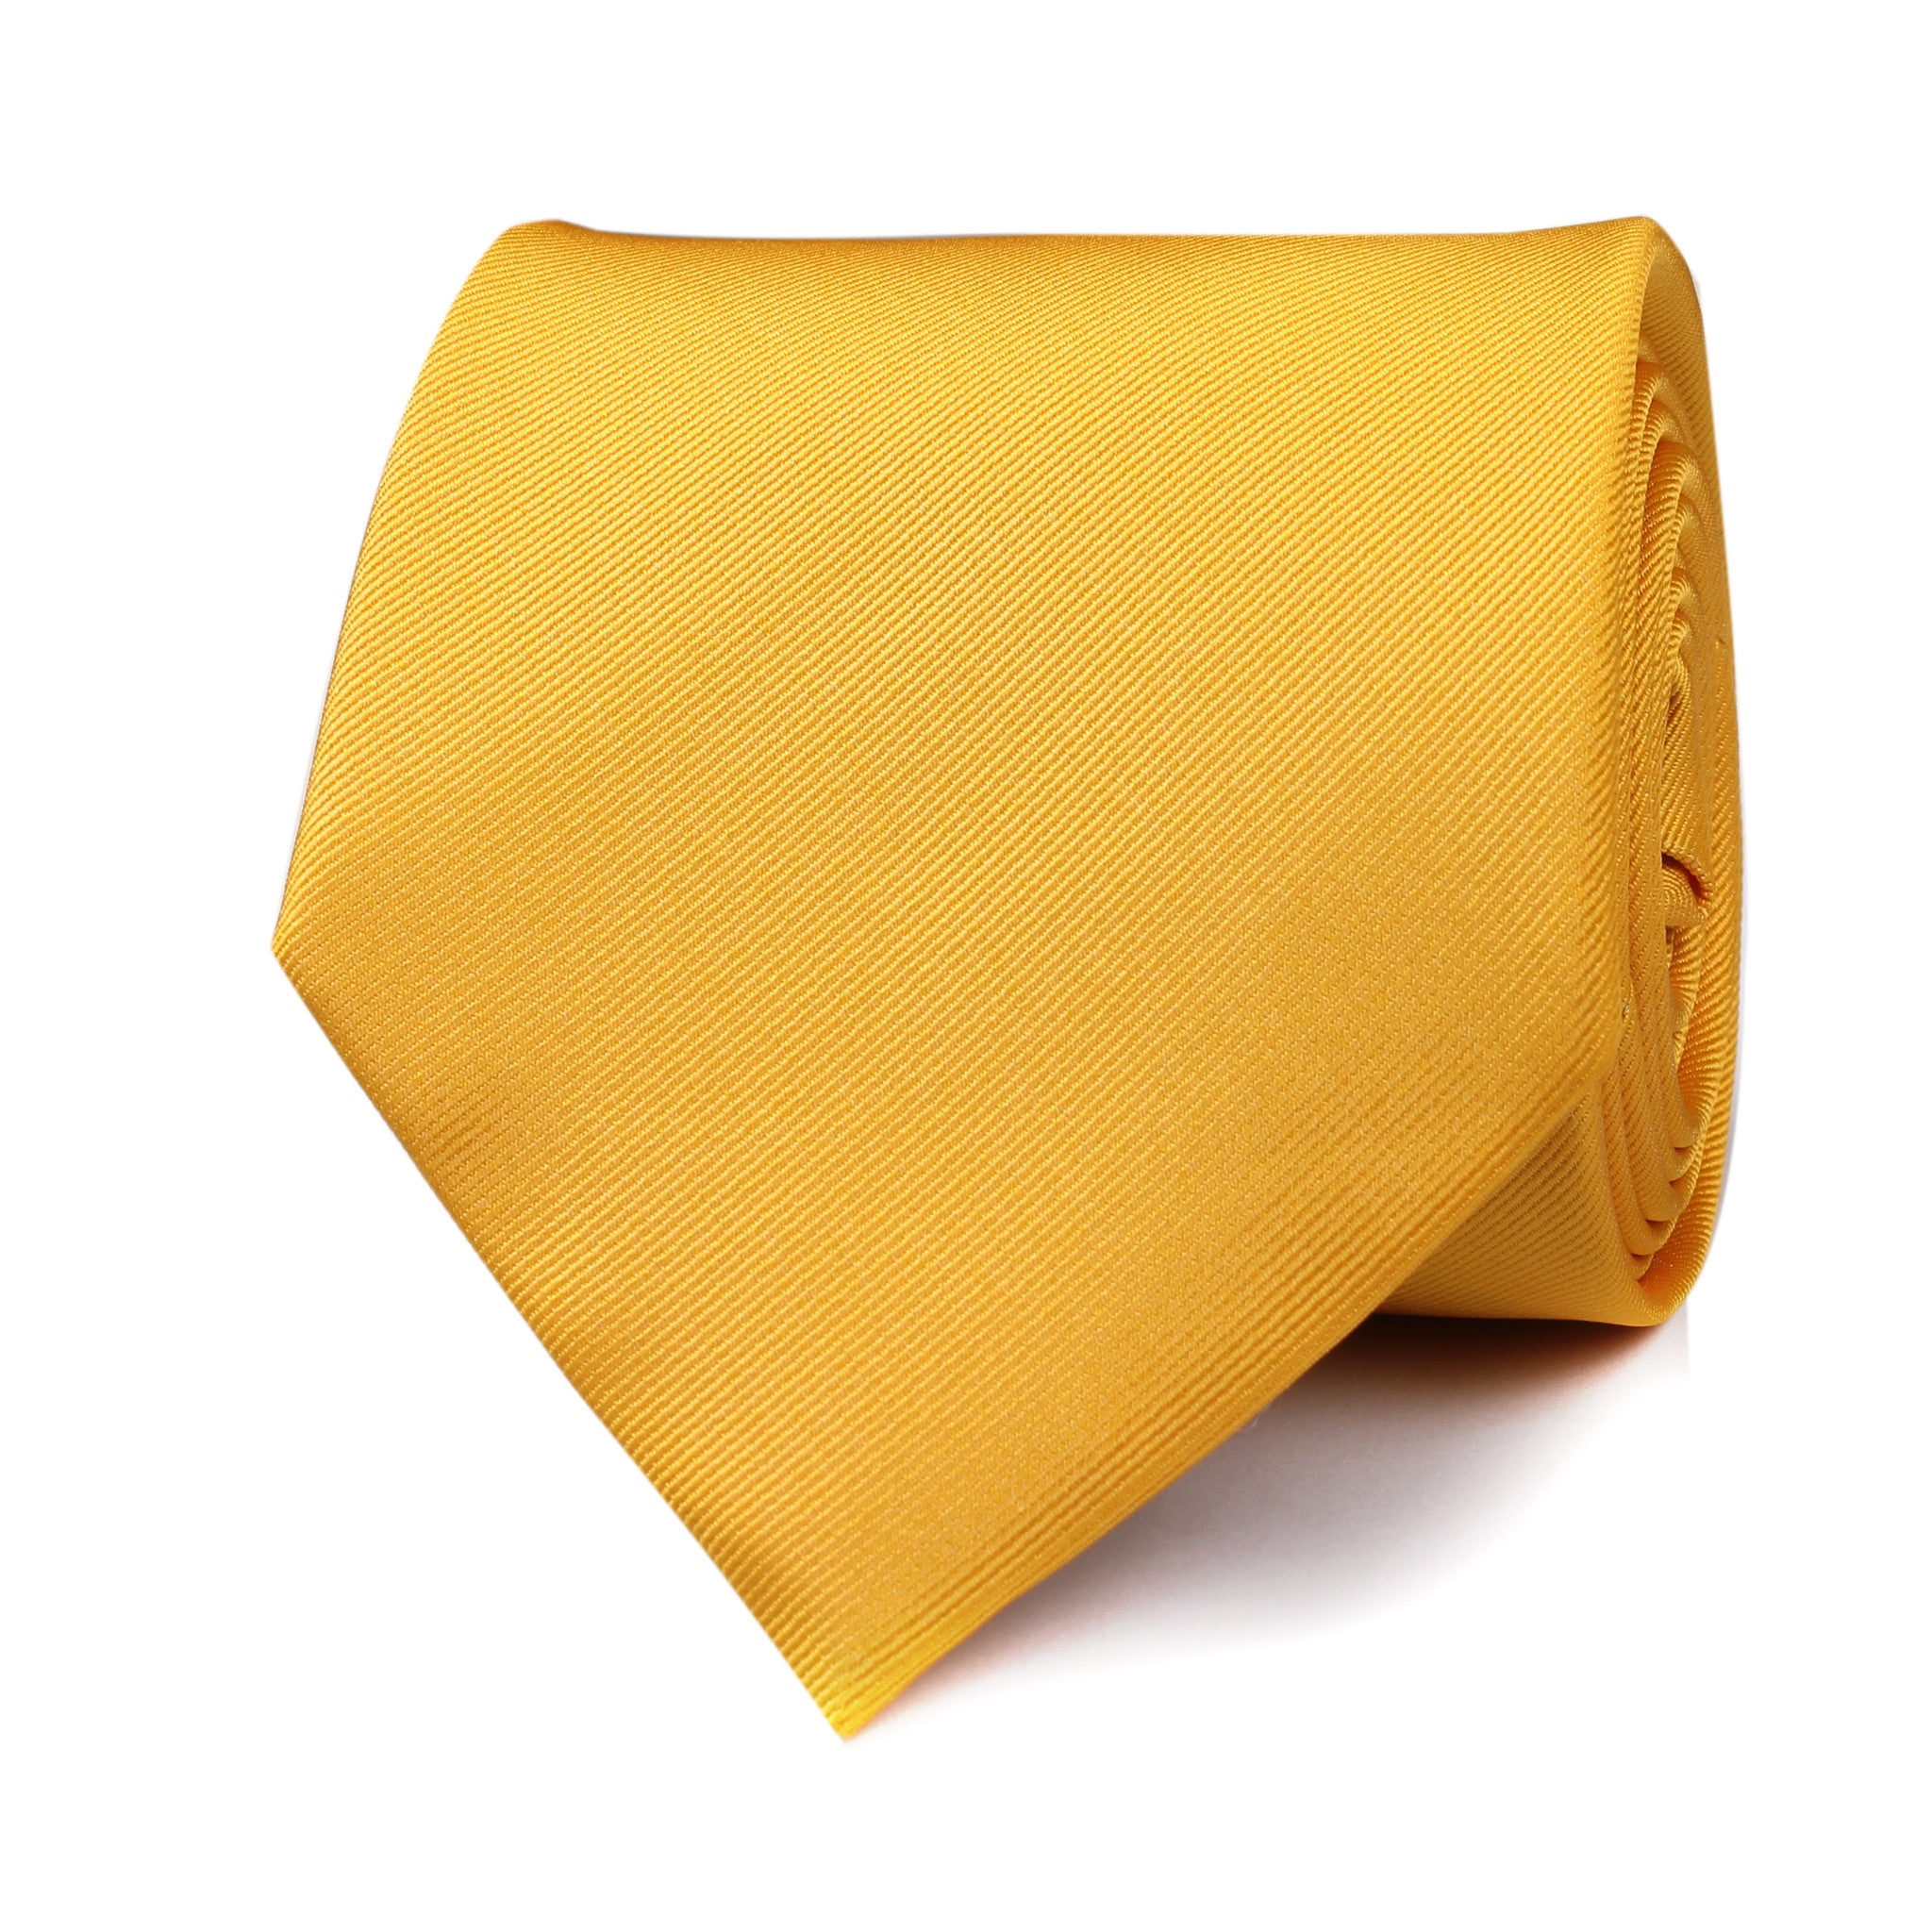 Banana Yellow Necktie Front View